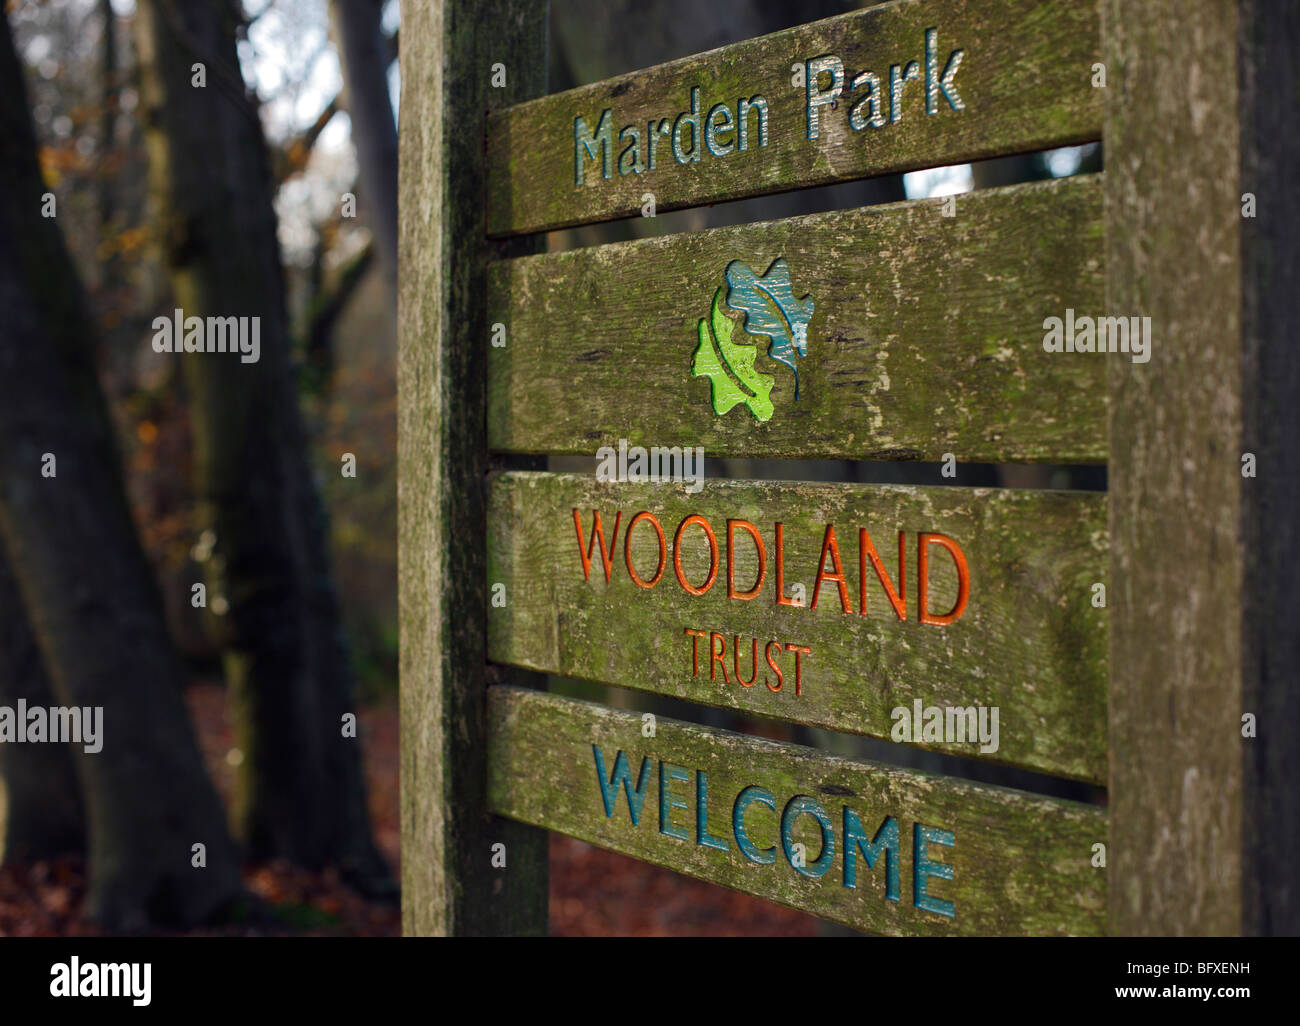 Woodland Trust welcome sign. Marden Park, Woldingham, Surrey, England, UK. Stock Photo